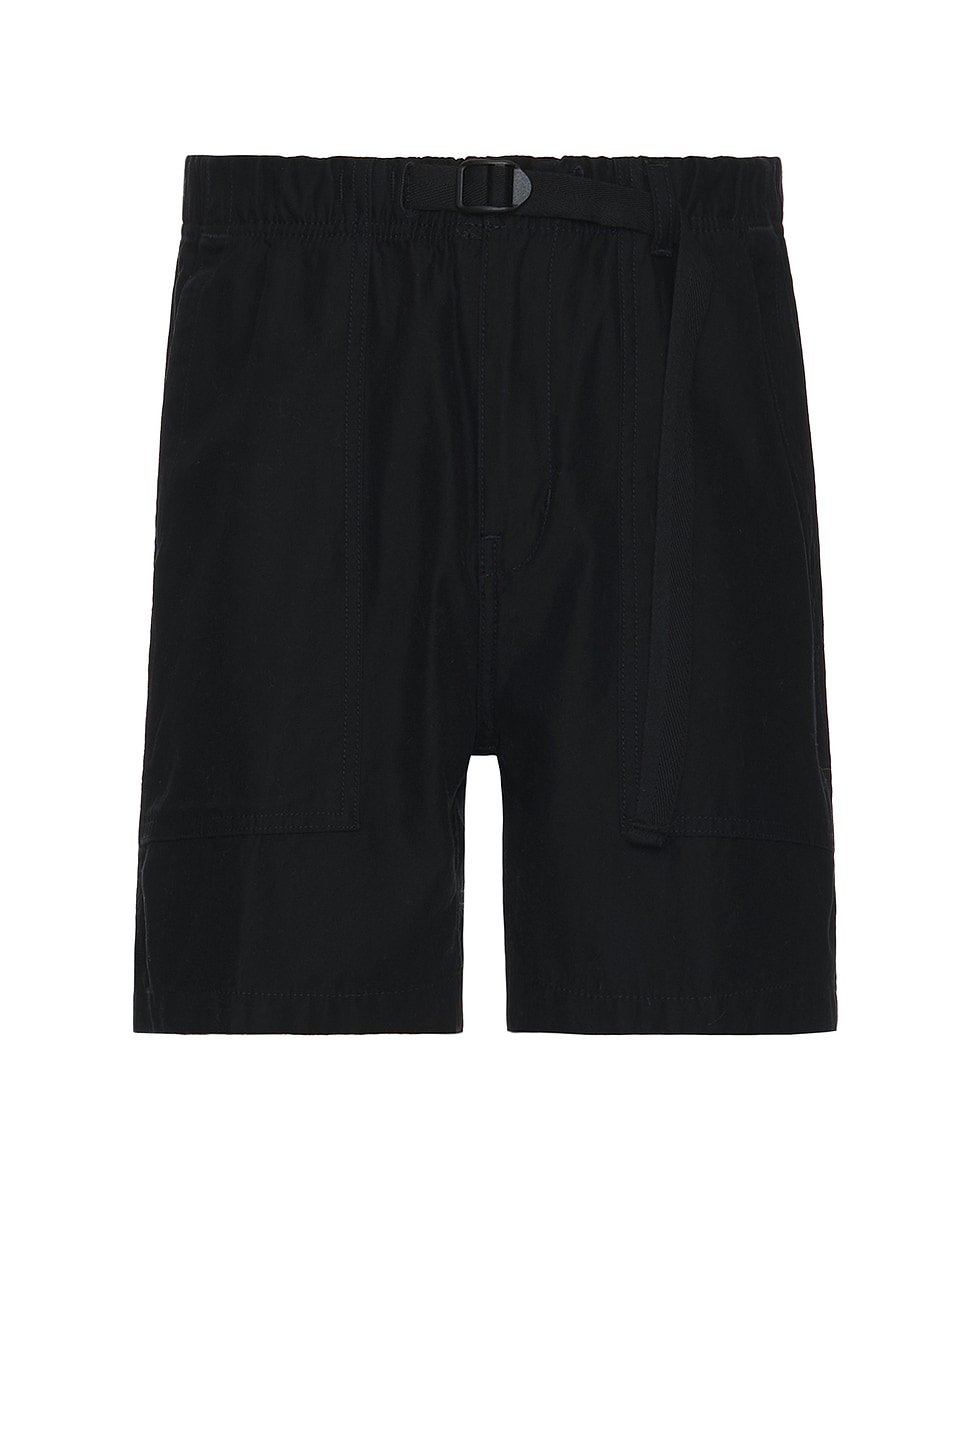 Image 1 of Carhartt WIP Hayworth Short in Black Rinsed